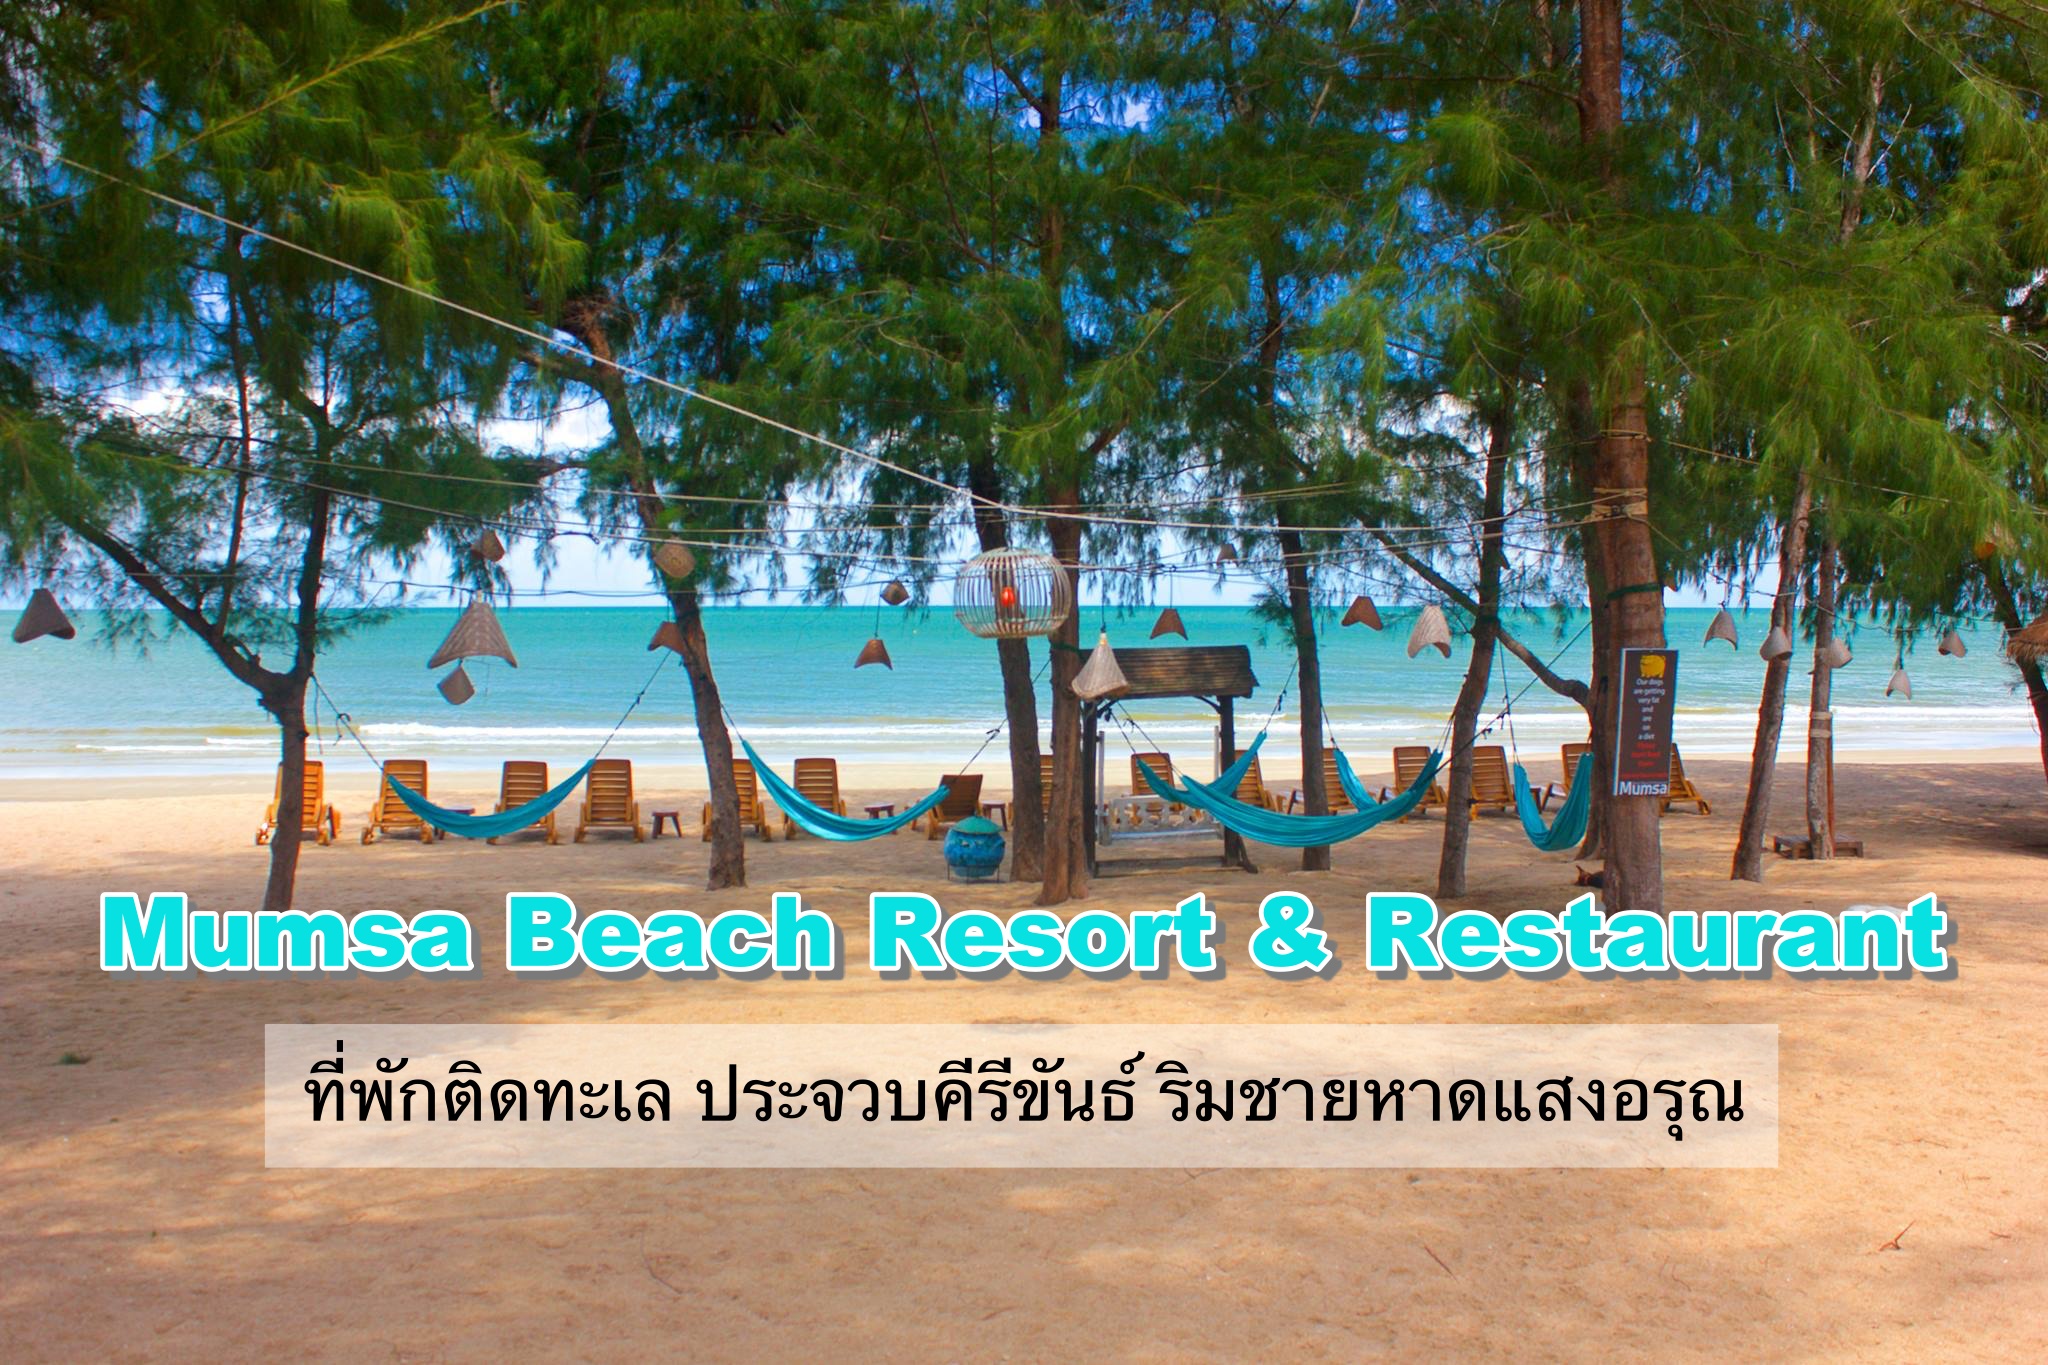 Mumsa Beach Resort & Restaurant ที่พักติดทะเล ประจวบคีรีขันธ์ ที่พักริมชายหาดแสงอรุณ สุนัขพักได้